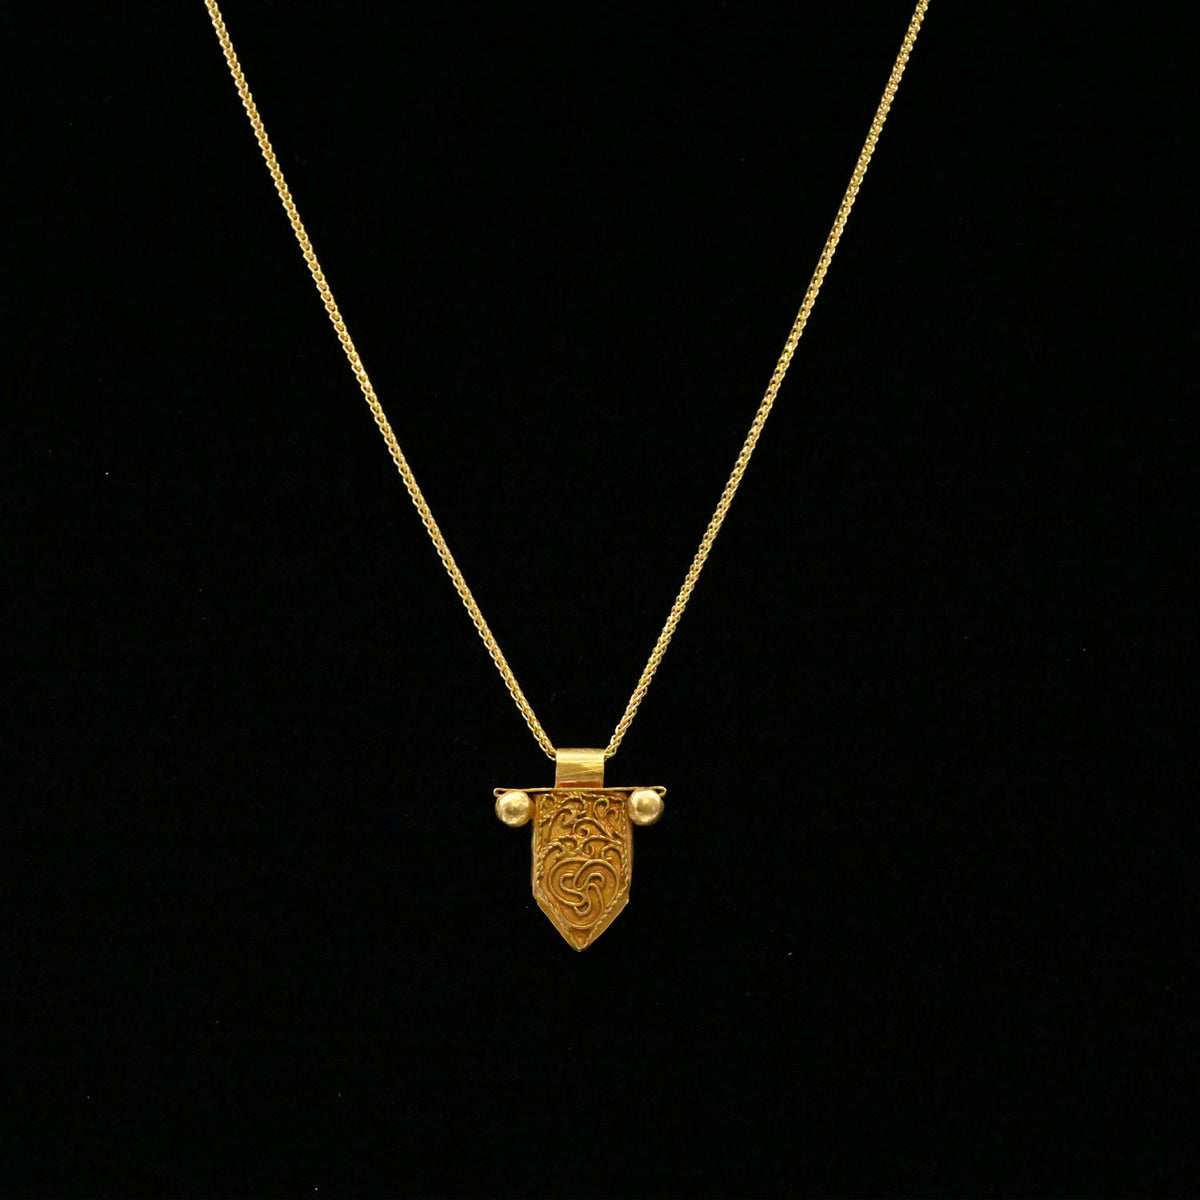 A very fine Islamic Gold Pendantca. 12th century CE